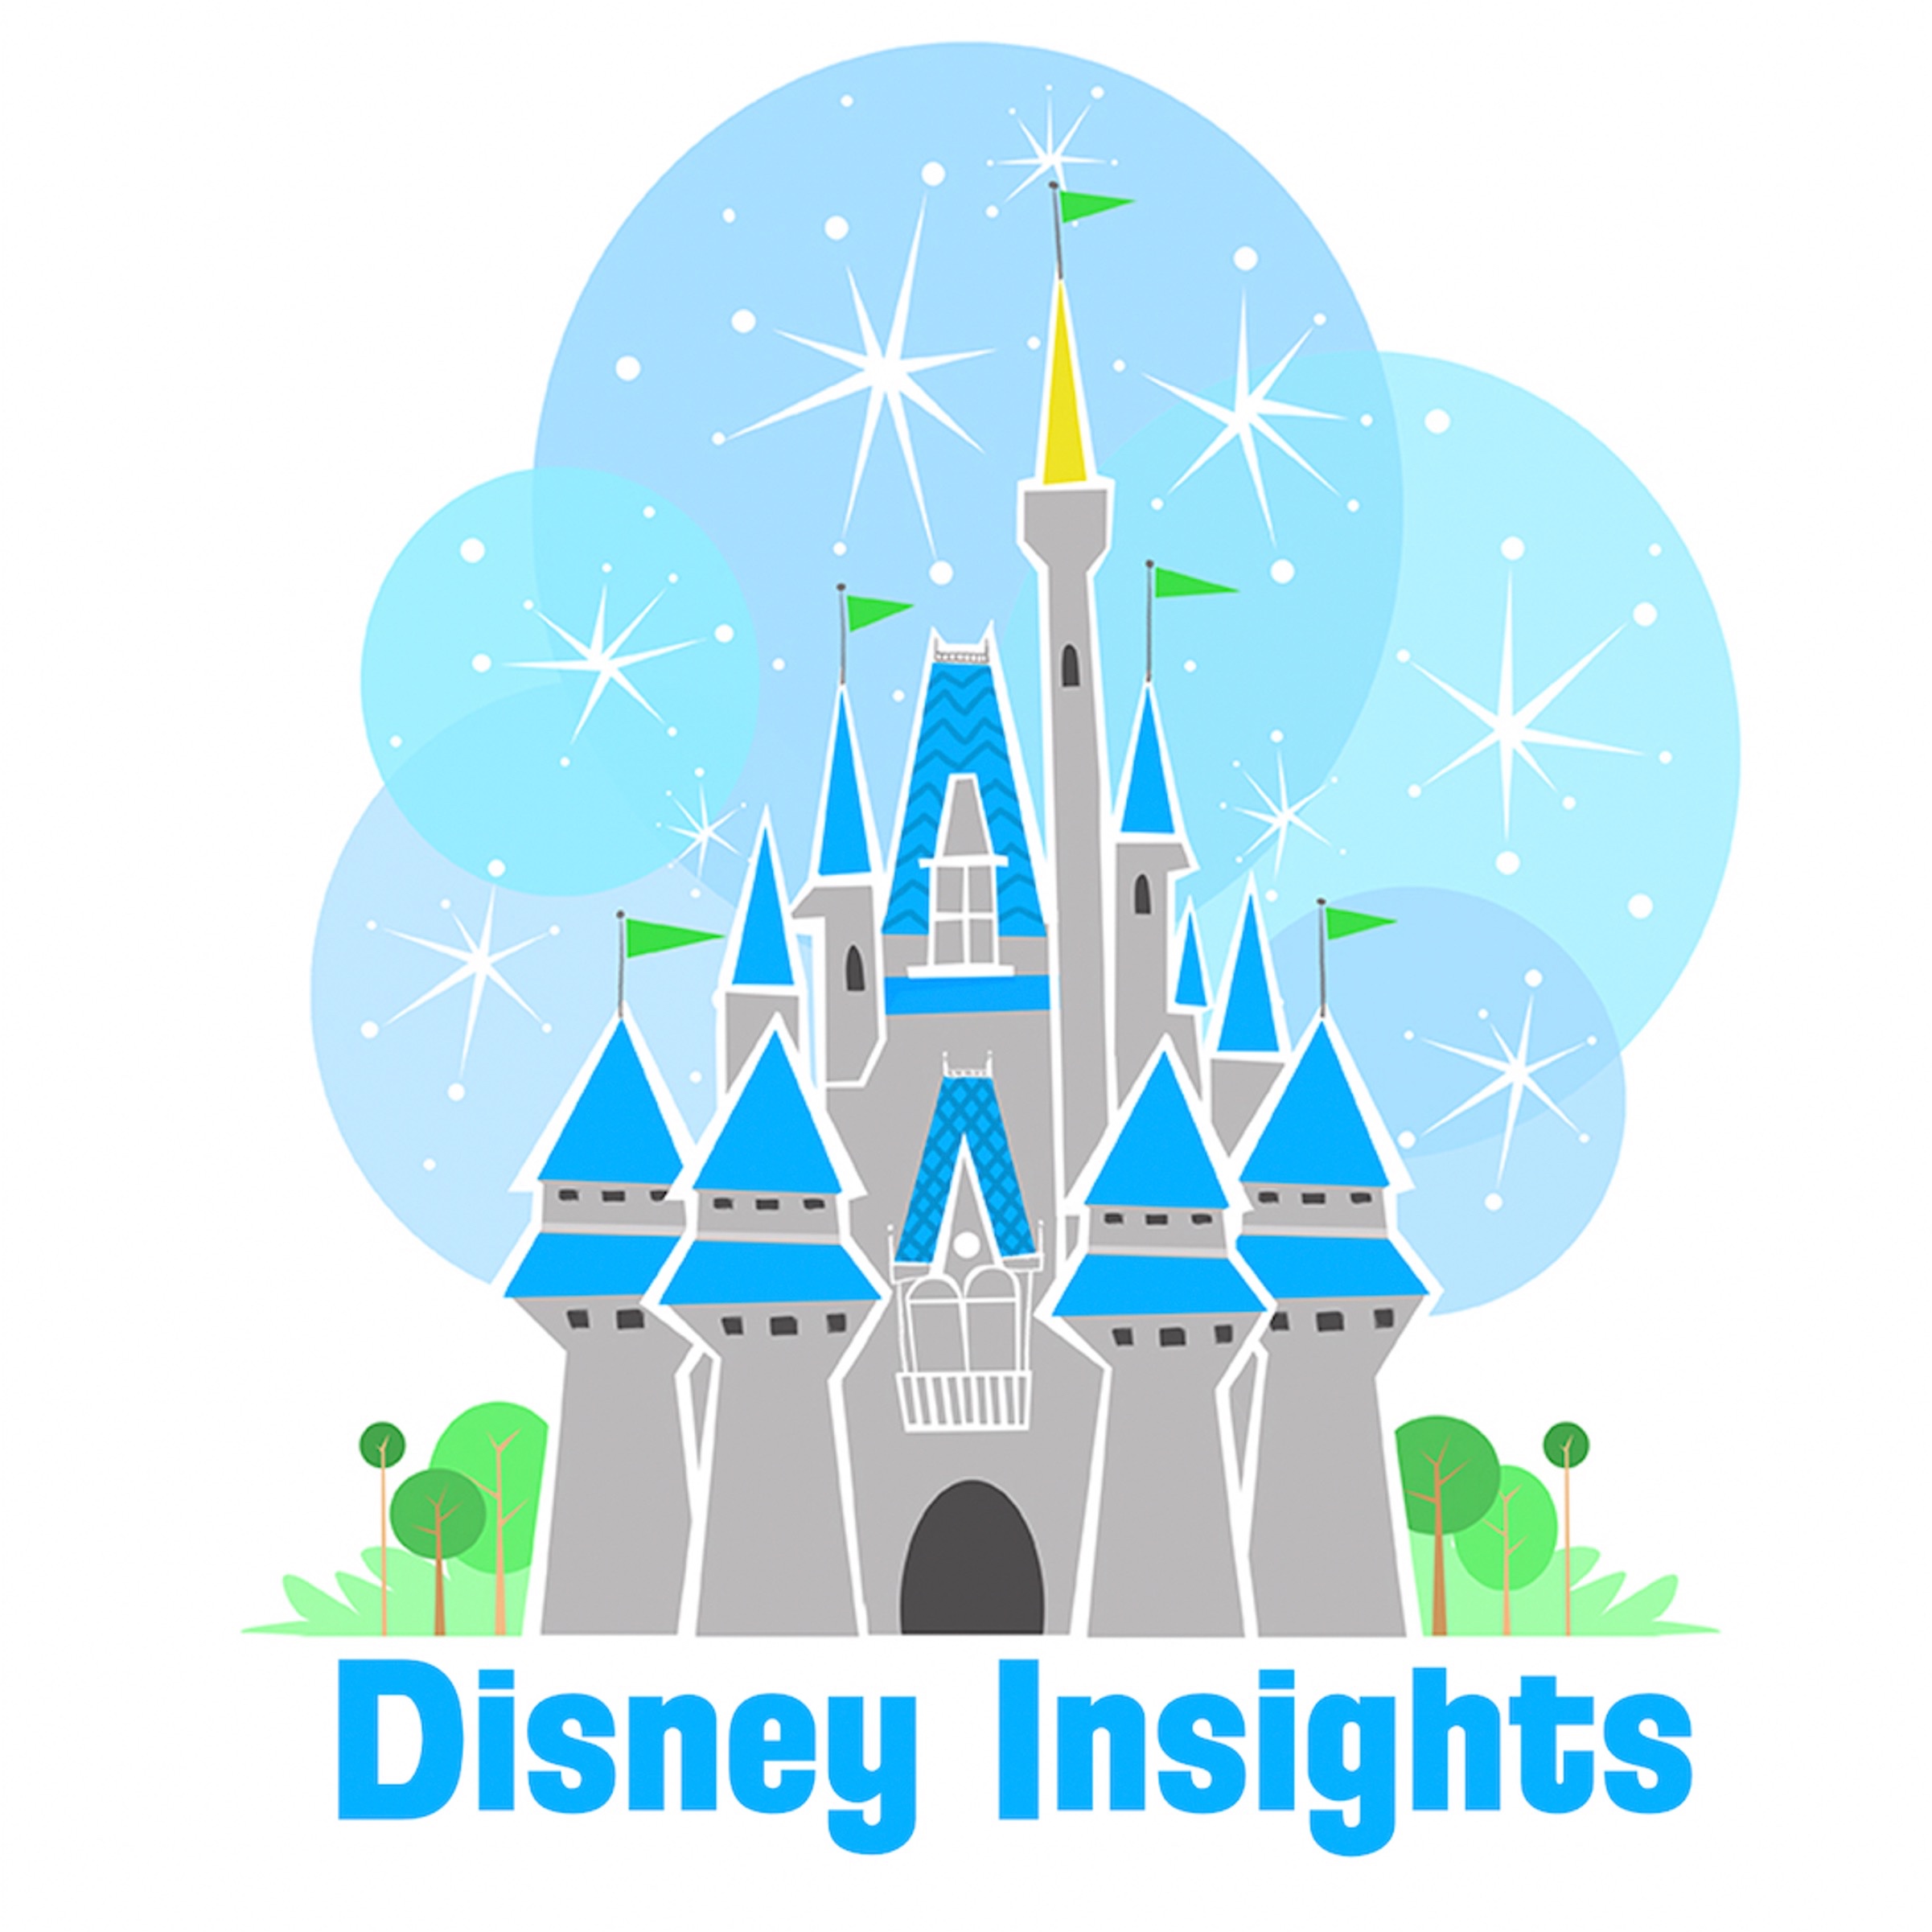 Disney Insights